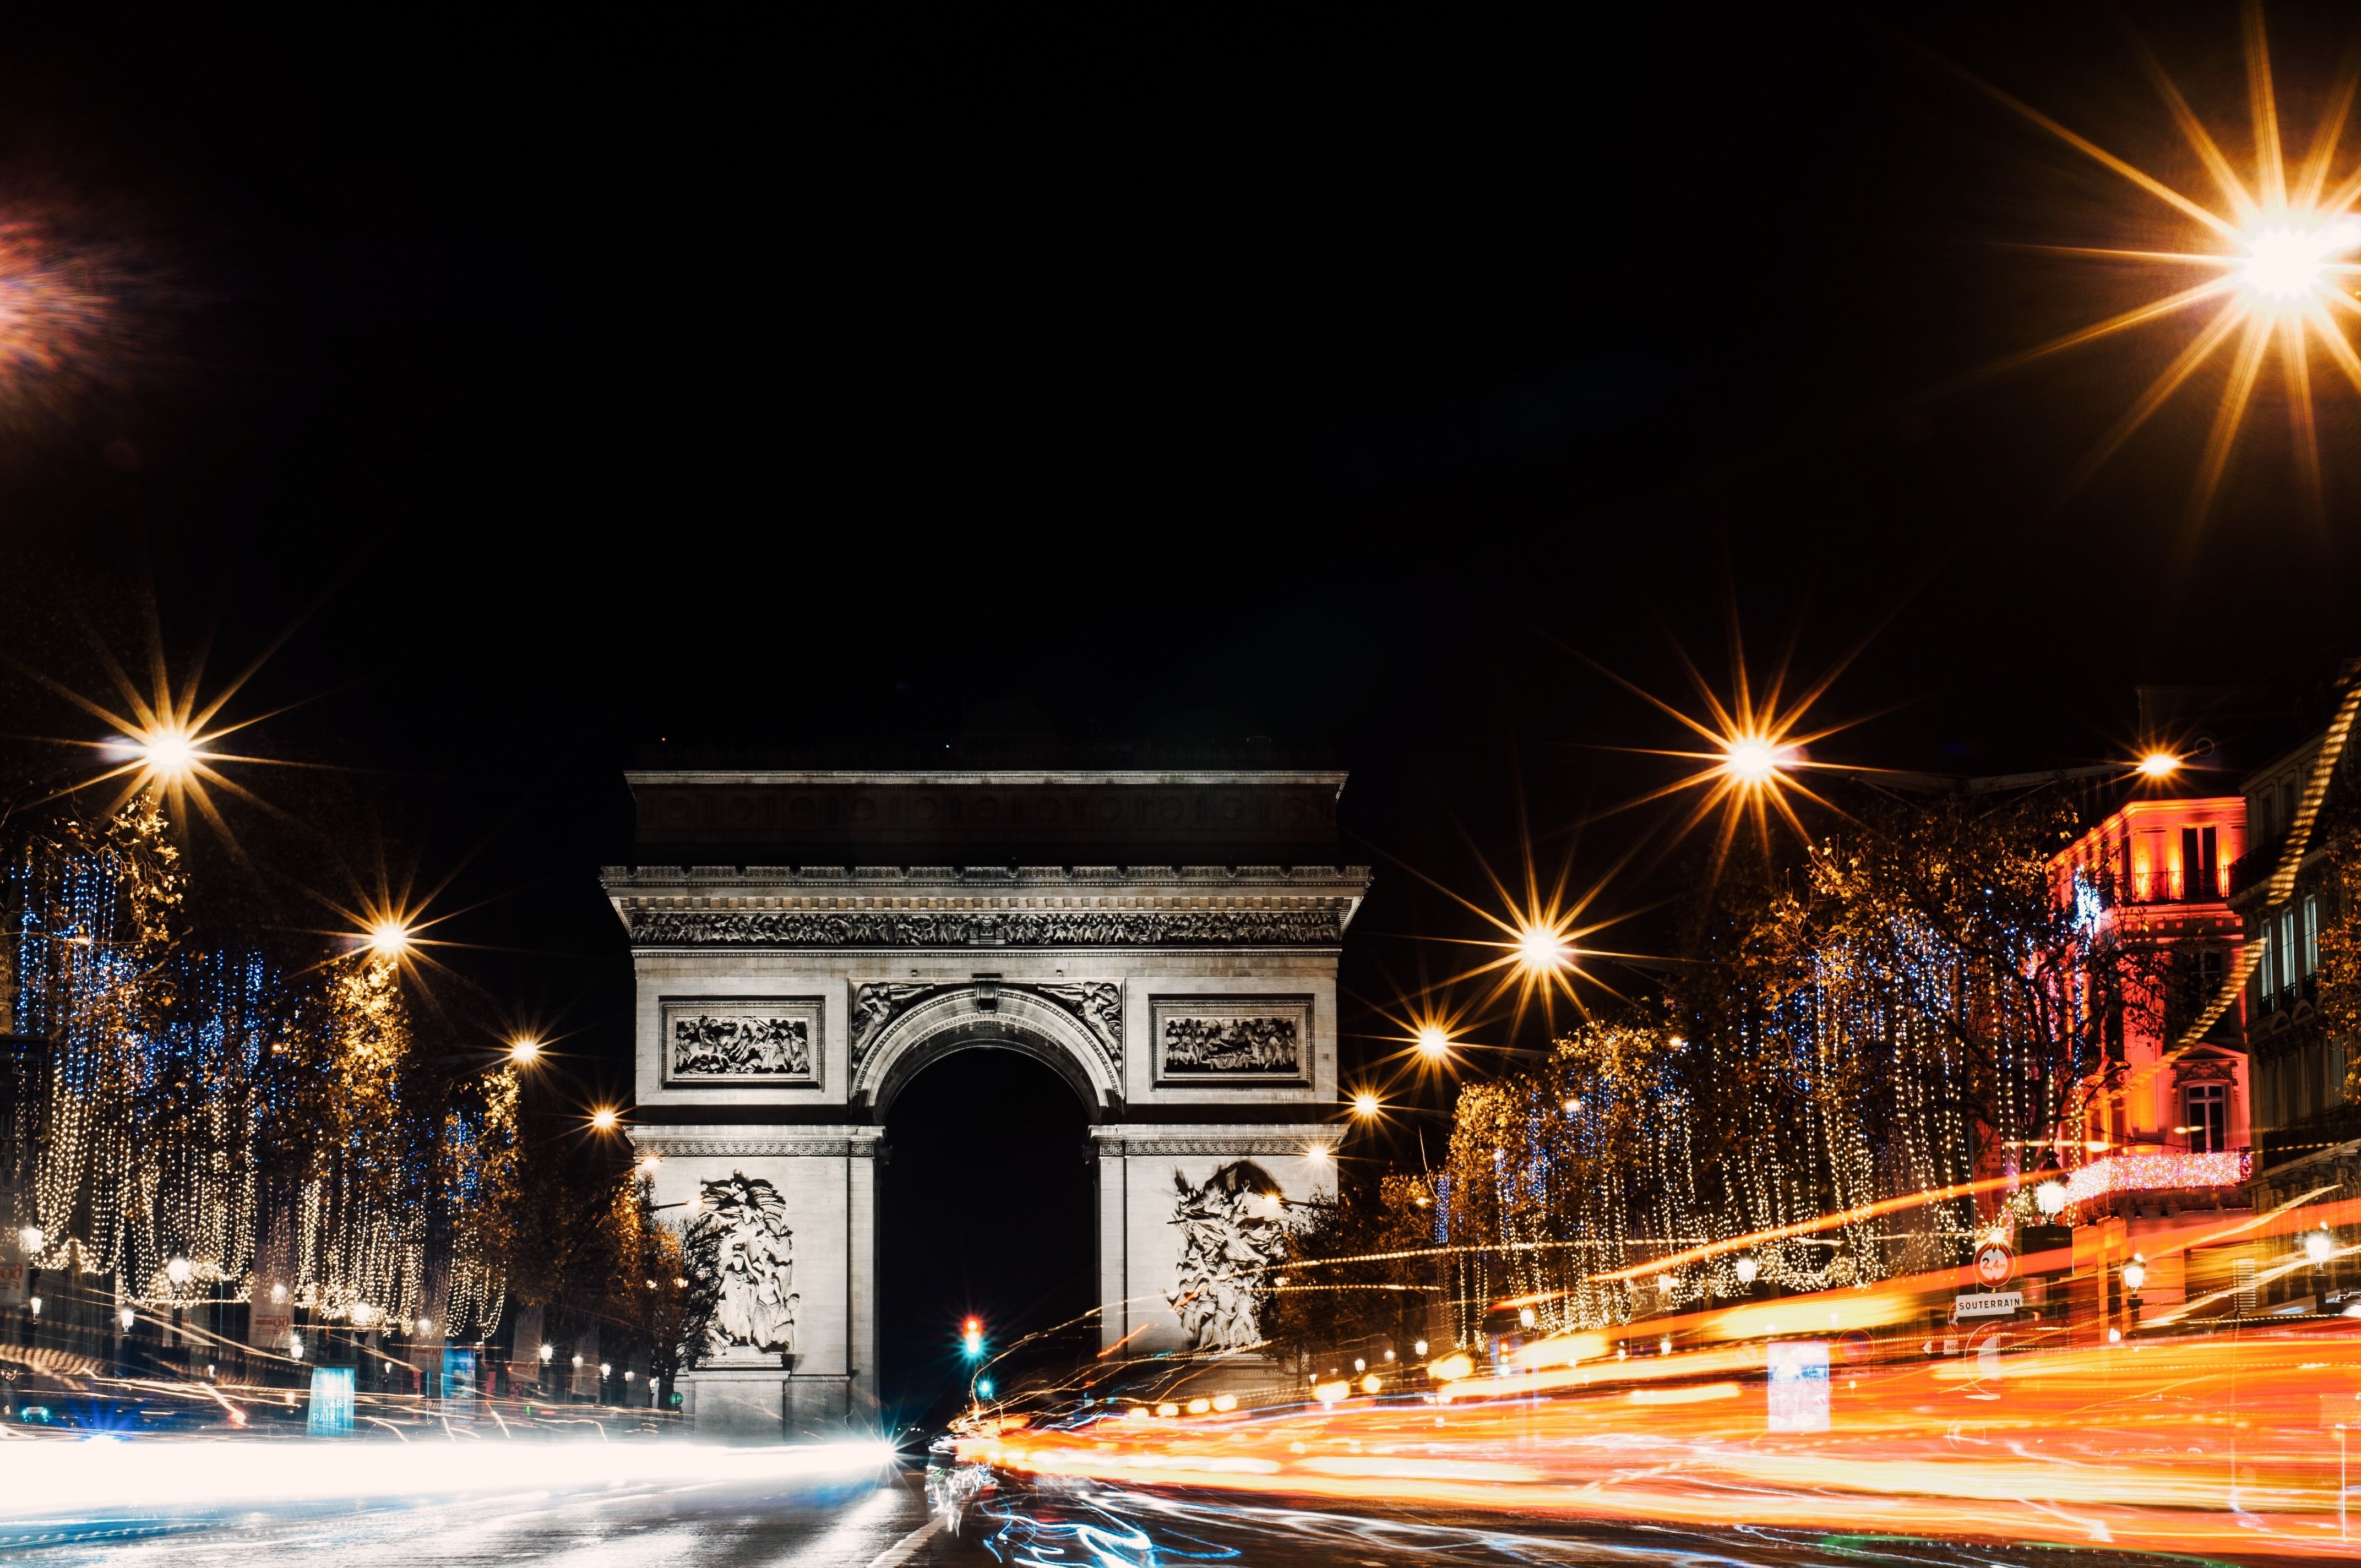 Avenue des Champs-Élysées at night with the Arc de Triomph in the background